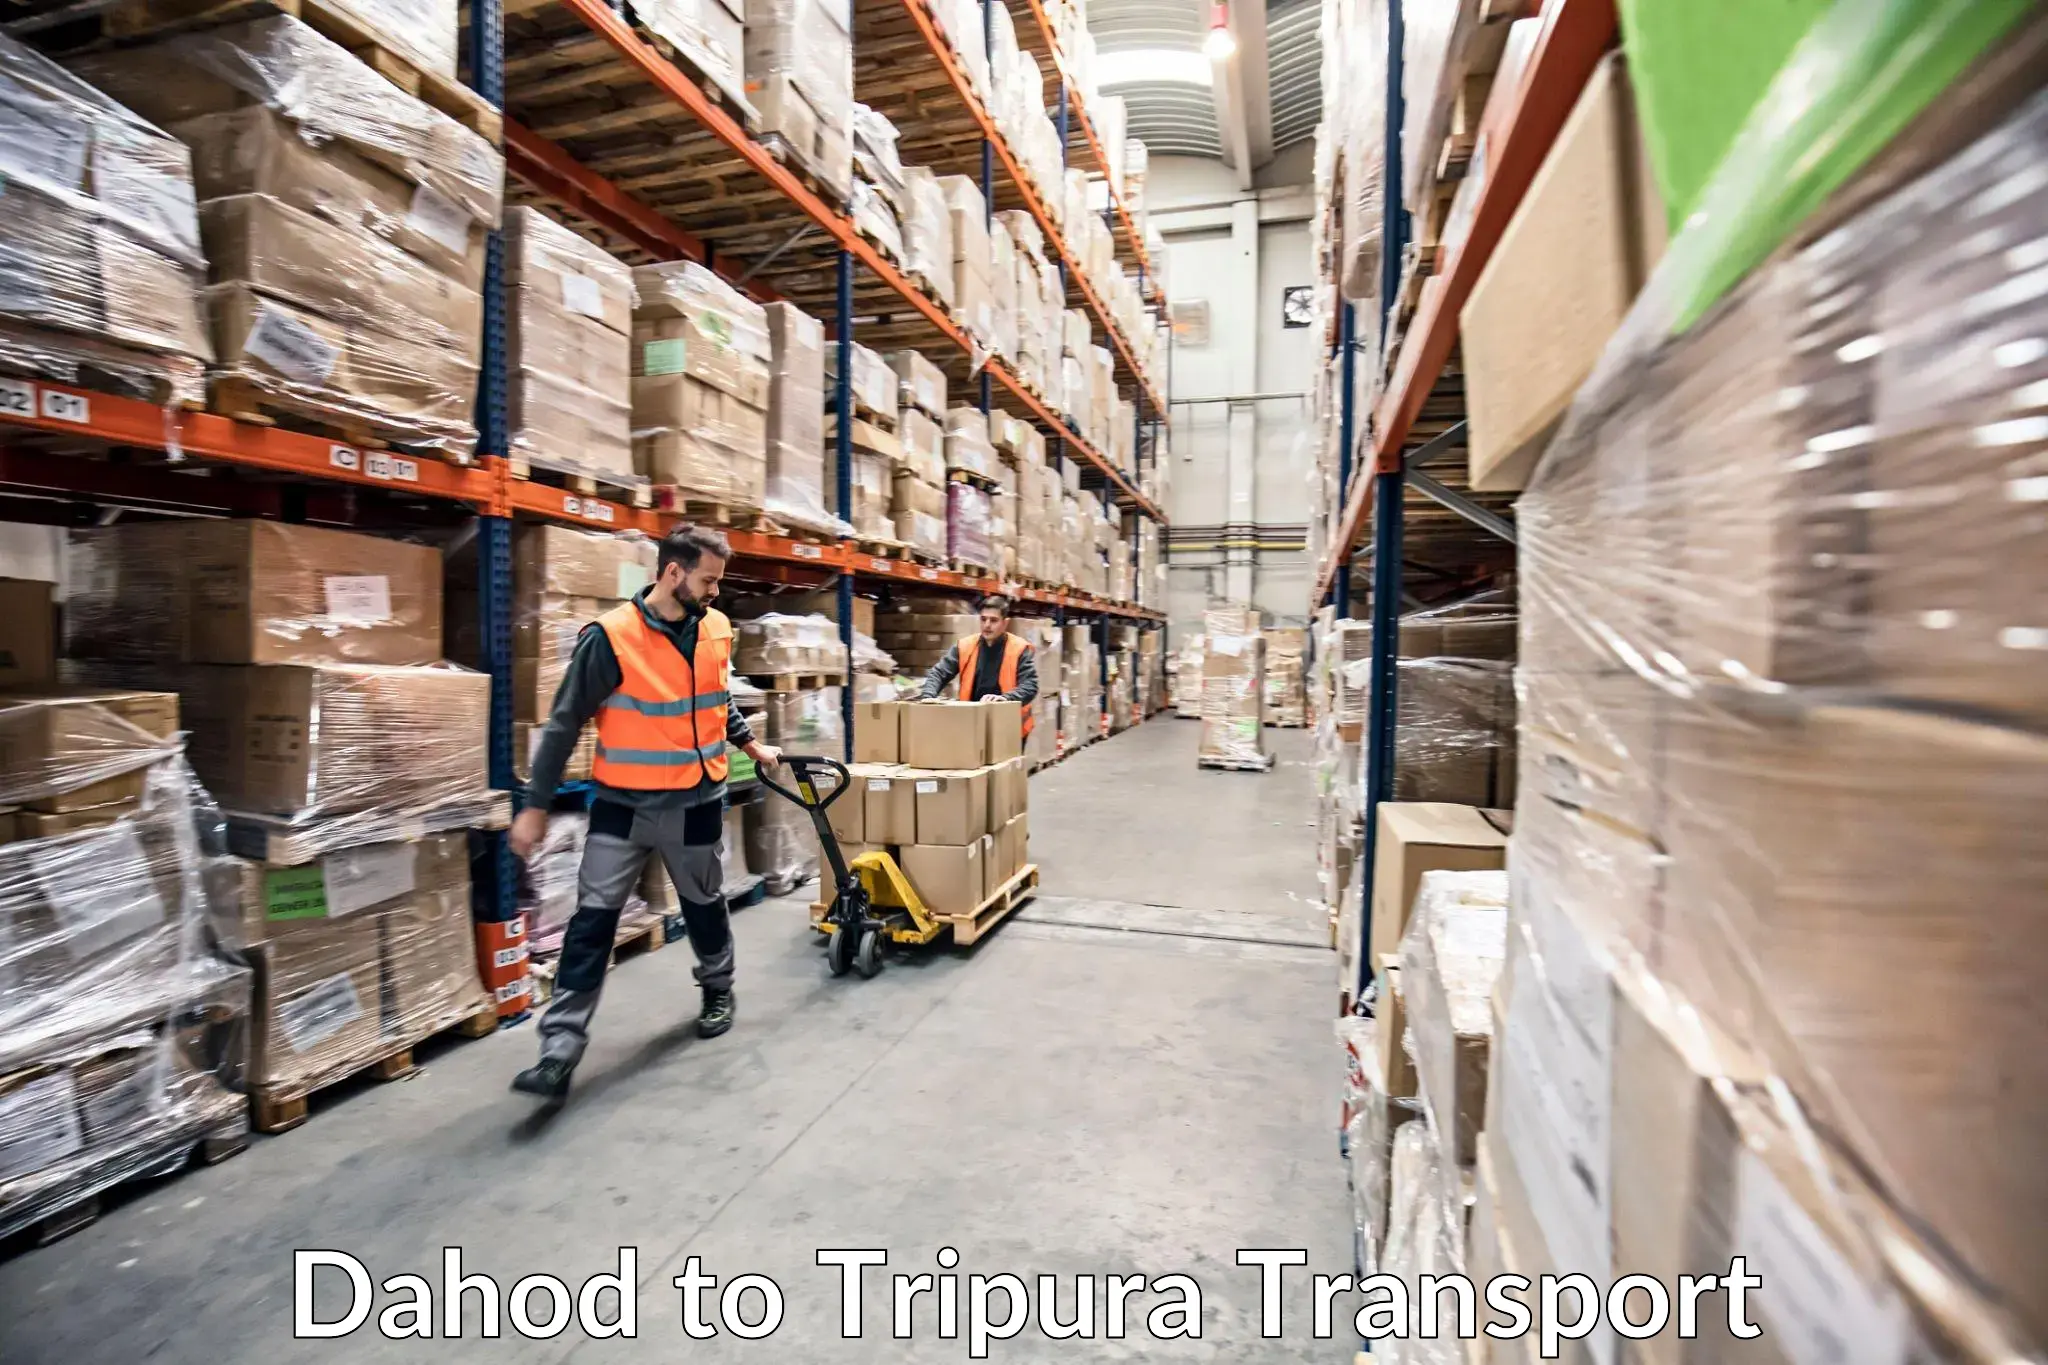 Truck transport companies in India Dahod to Udaipur Tripura